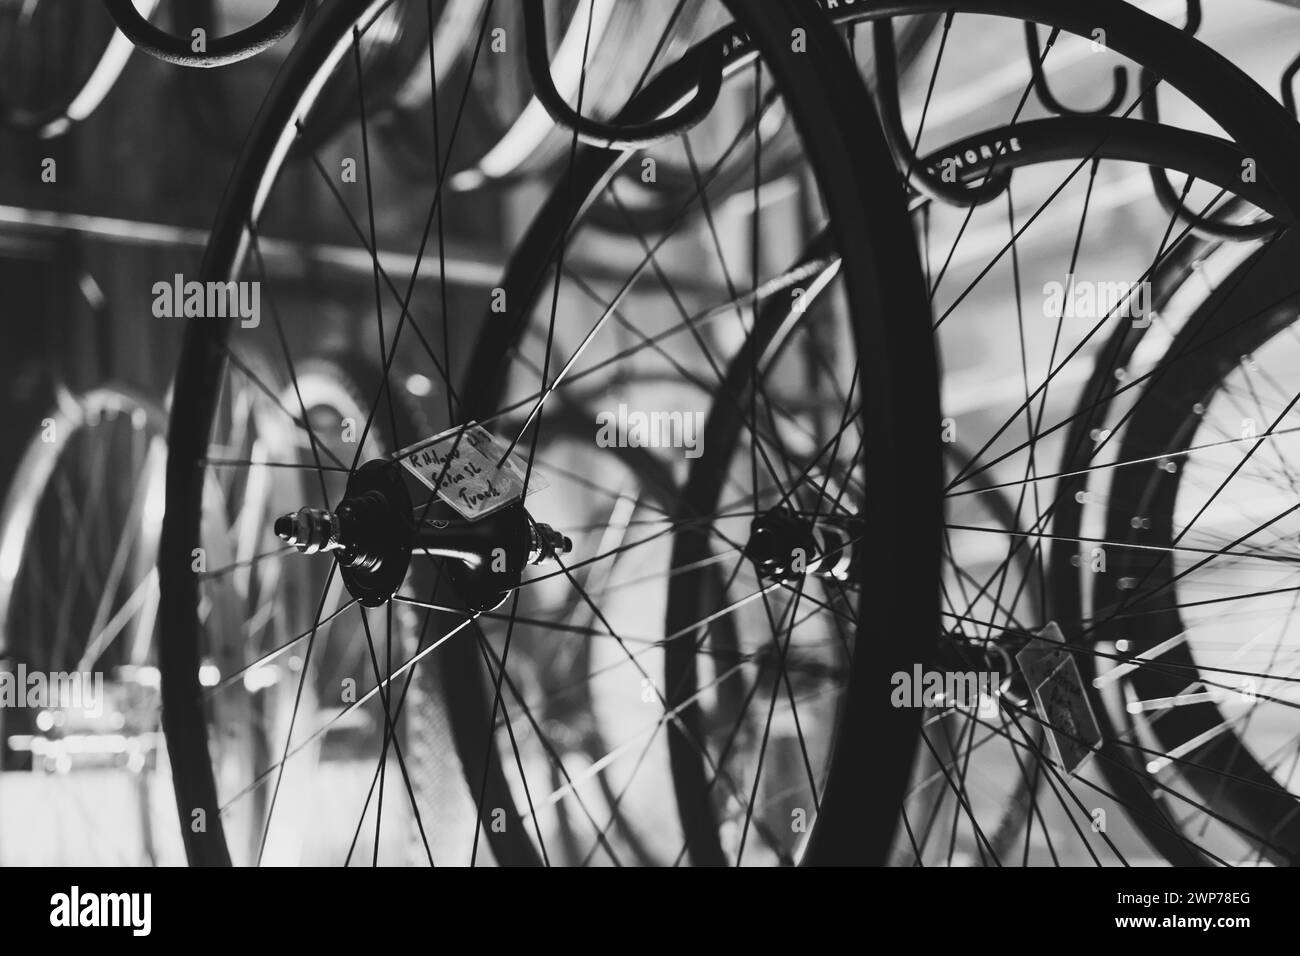 bicycle wheel rims hanging on hangers Stock Photo